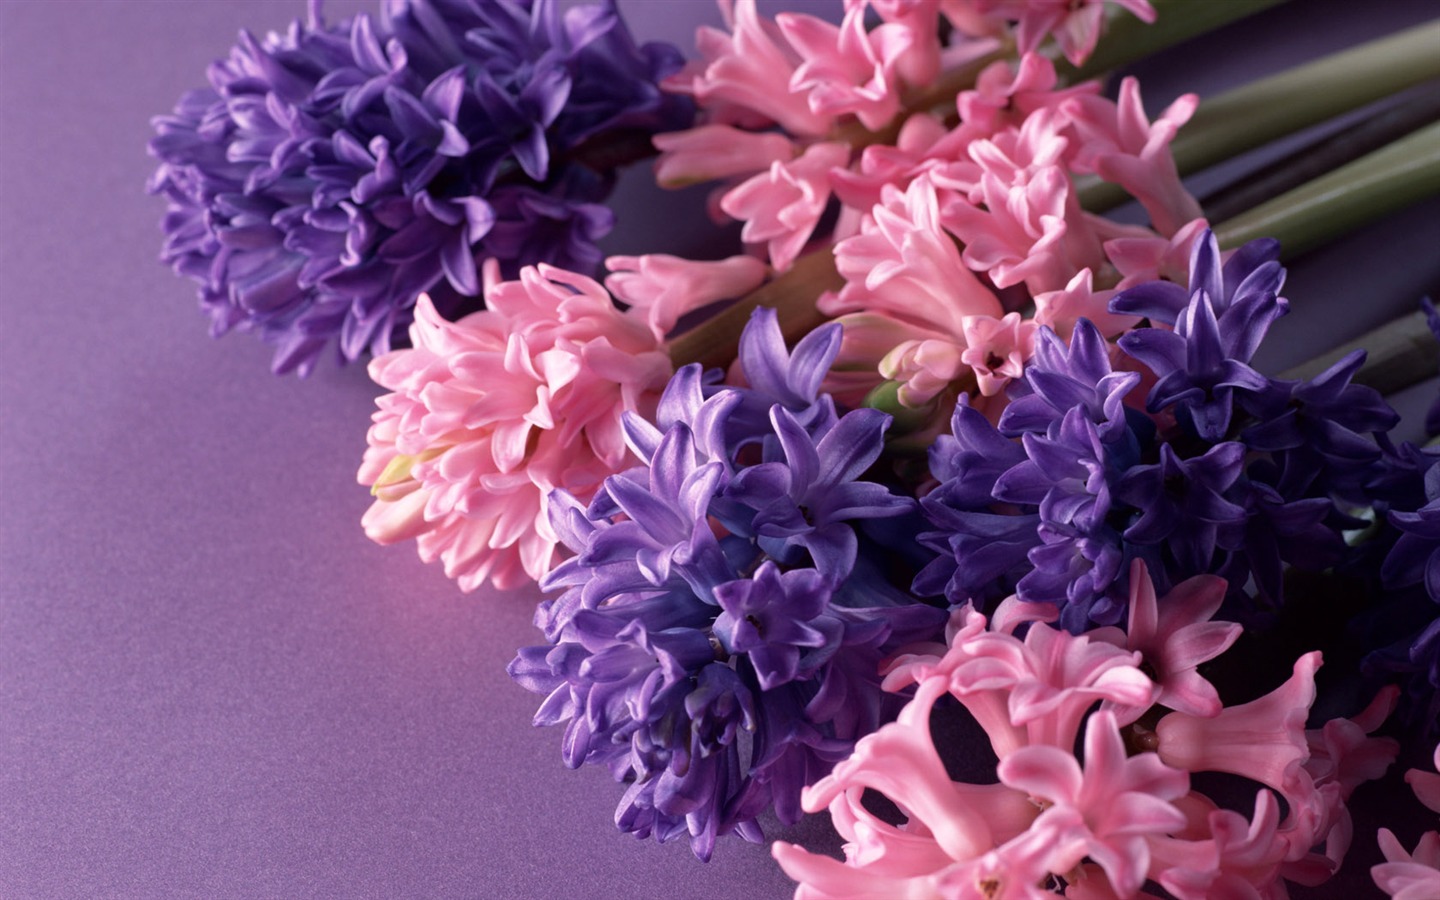 Flowers close-up (14) #11 - 1440x900